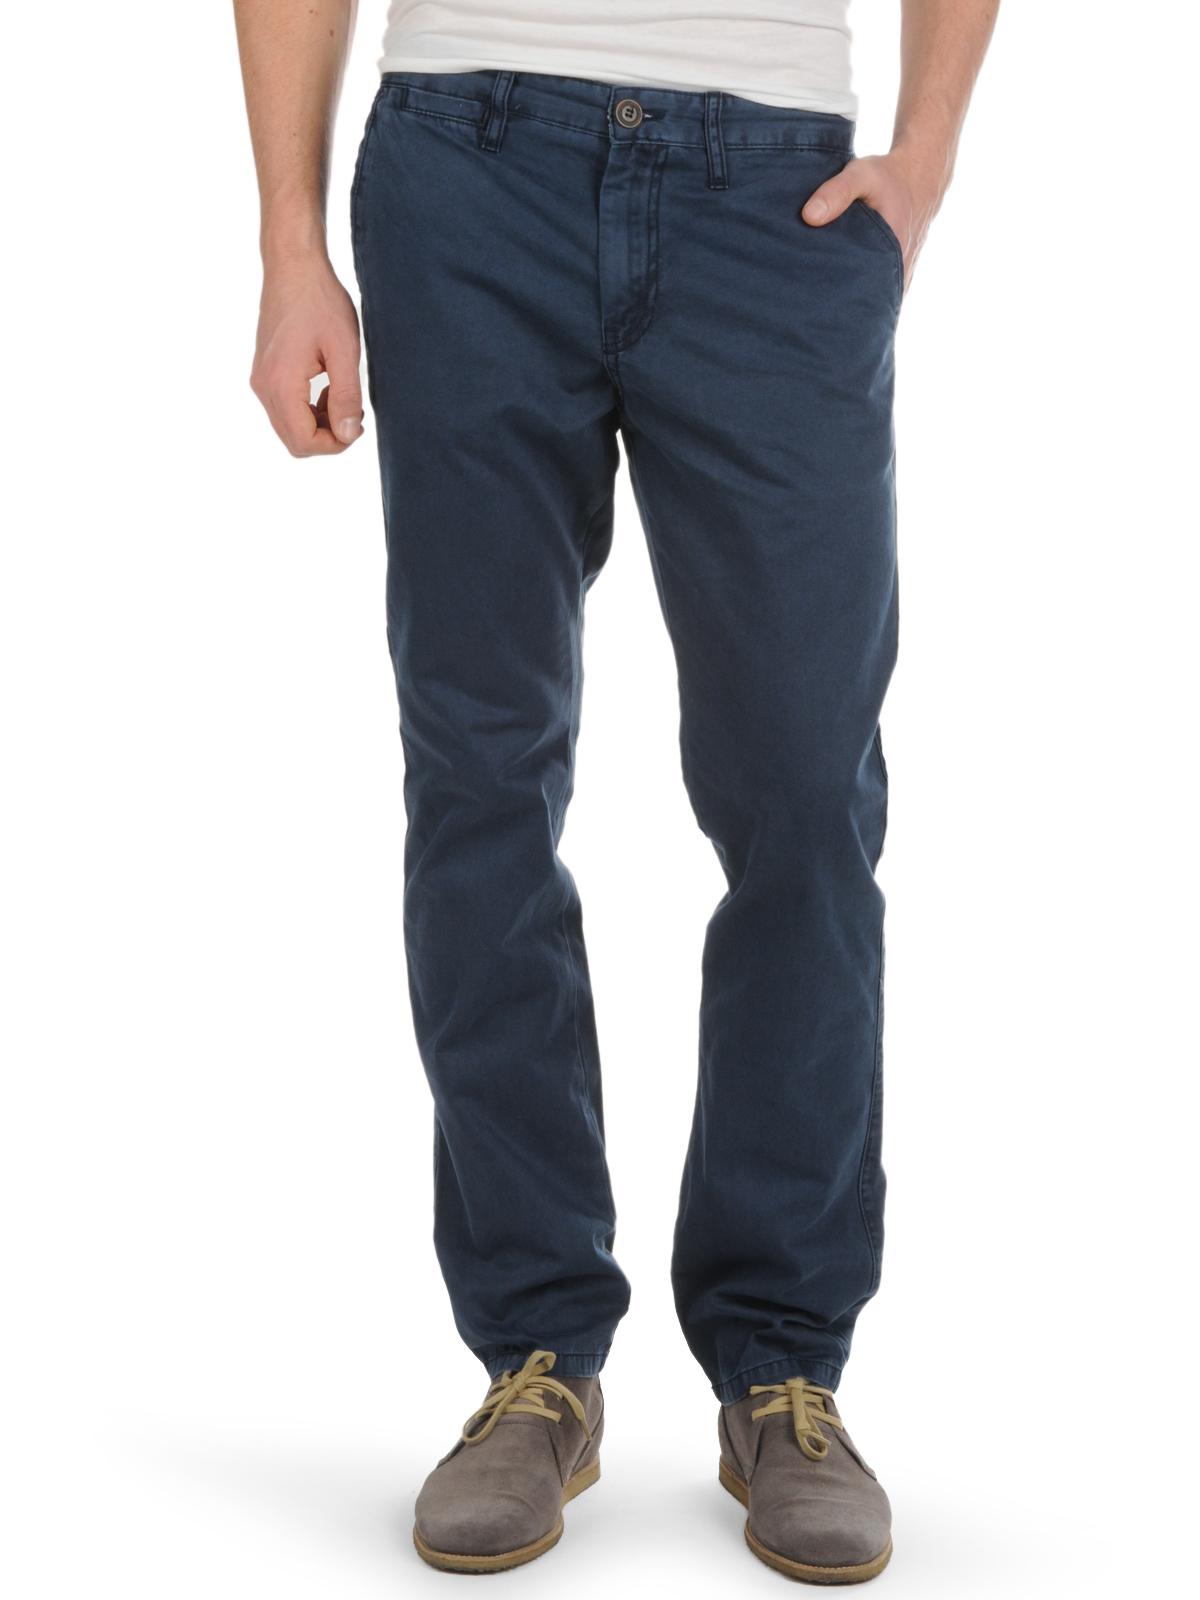 Foto Solid Jeans Pantalón chino azul marino / gris 32-32